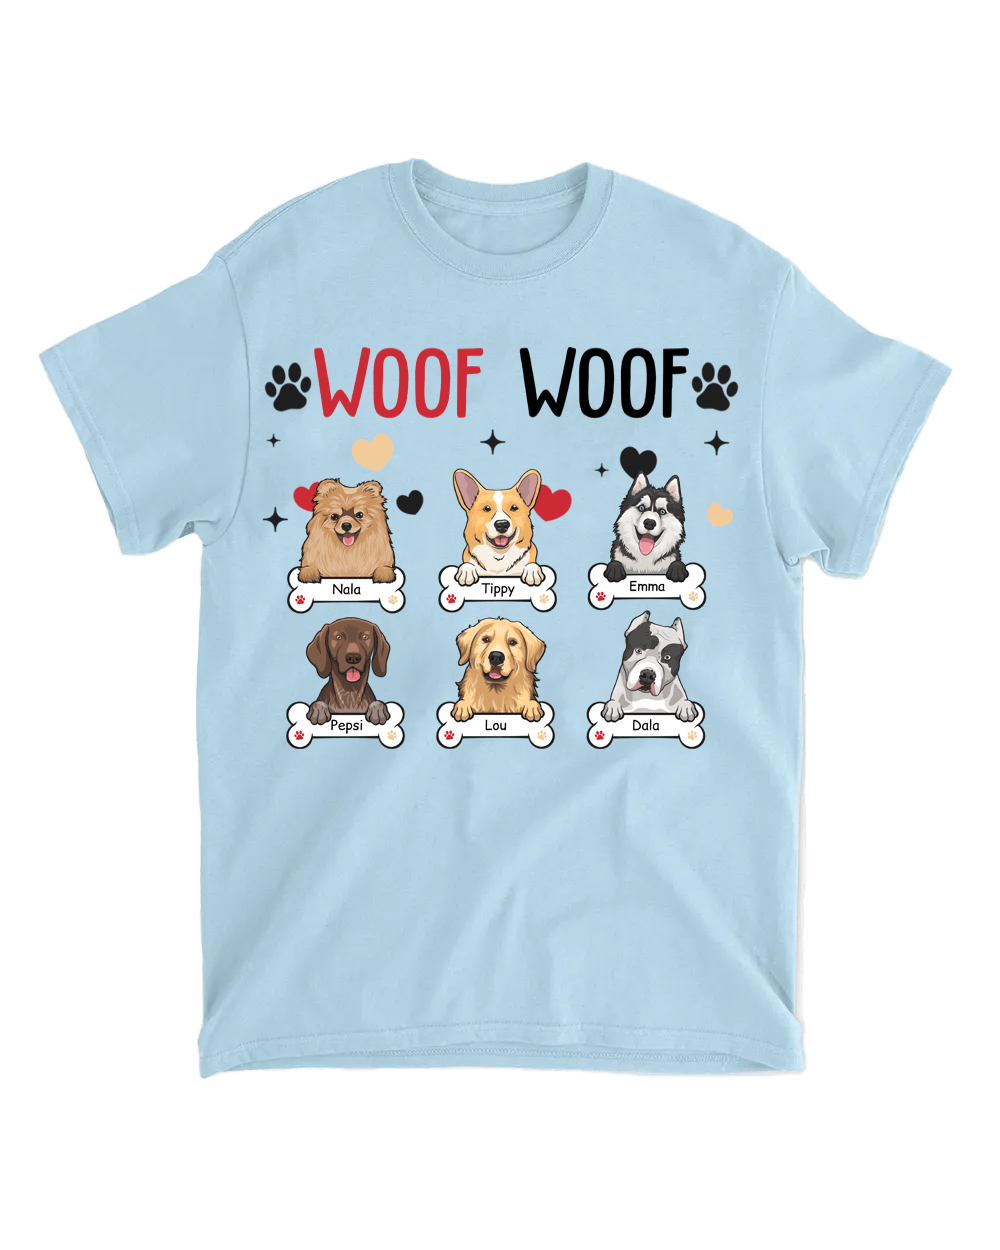 Tričko - Woof woof - až 6 psi - Climo